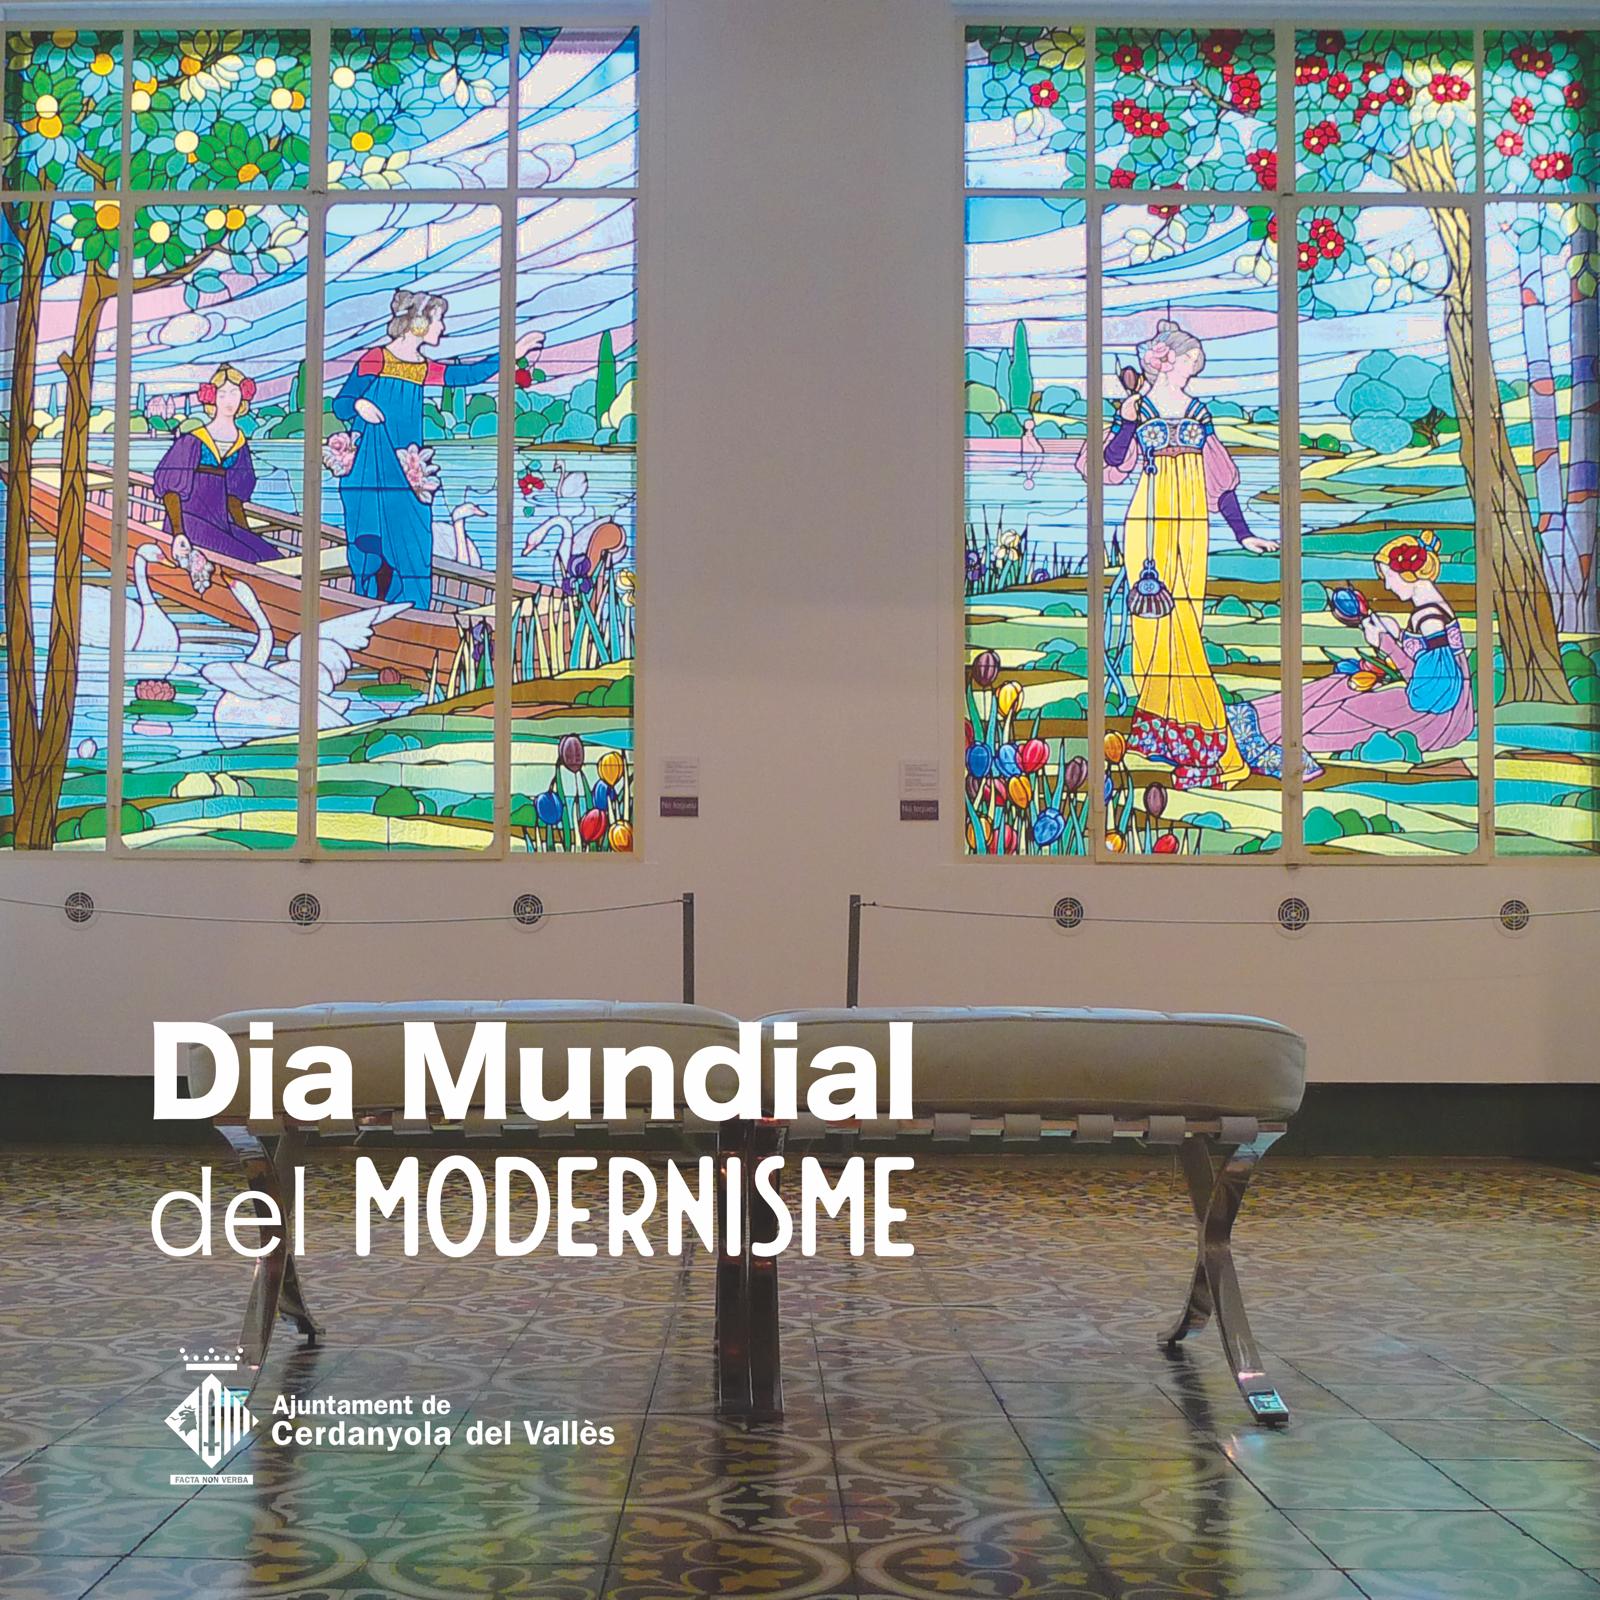 Imatge Dia Mundial Modernisme 2020 Cerdanyola